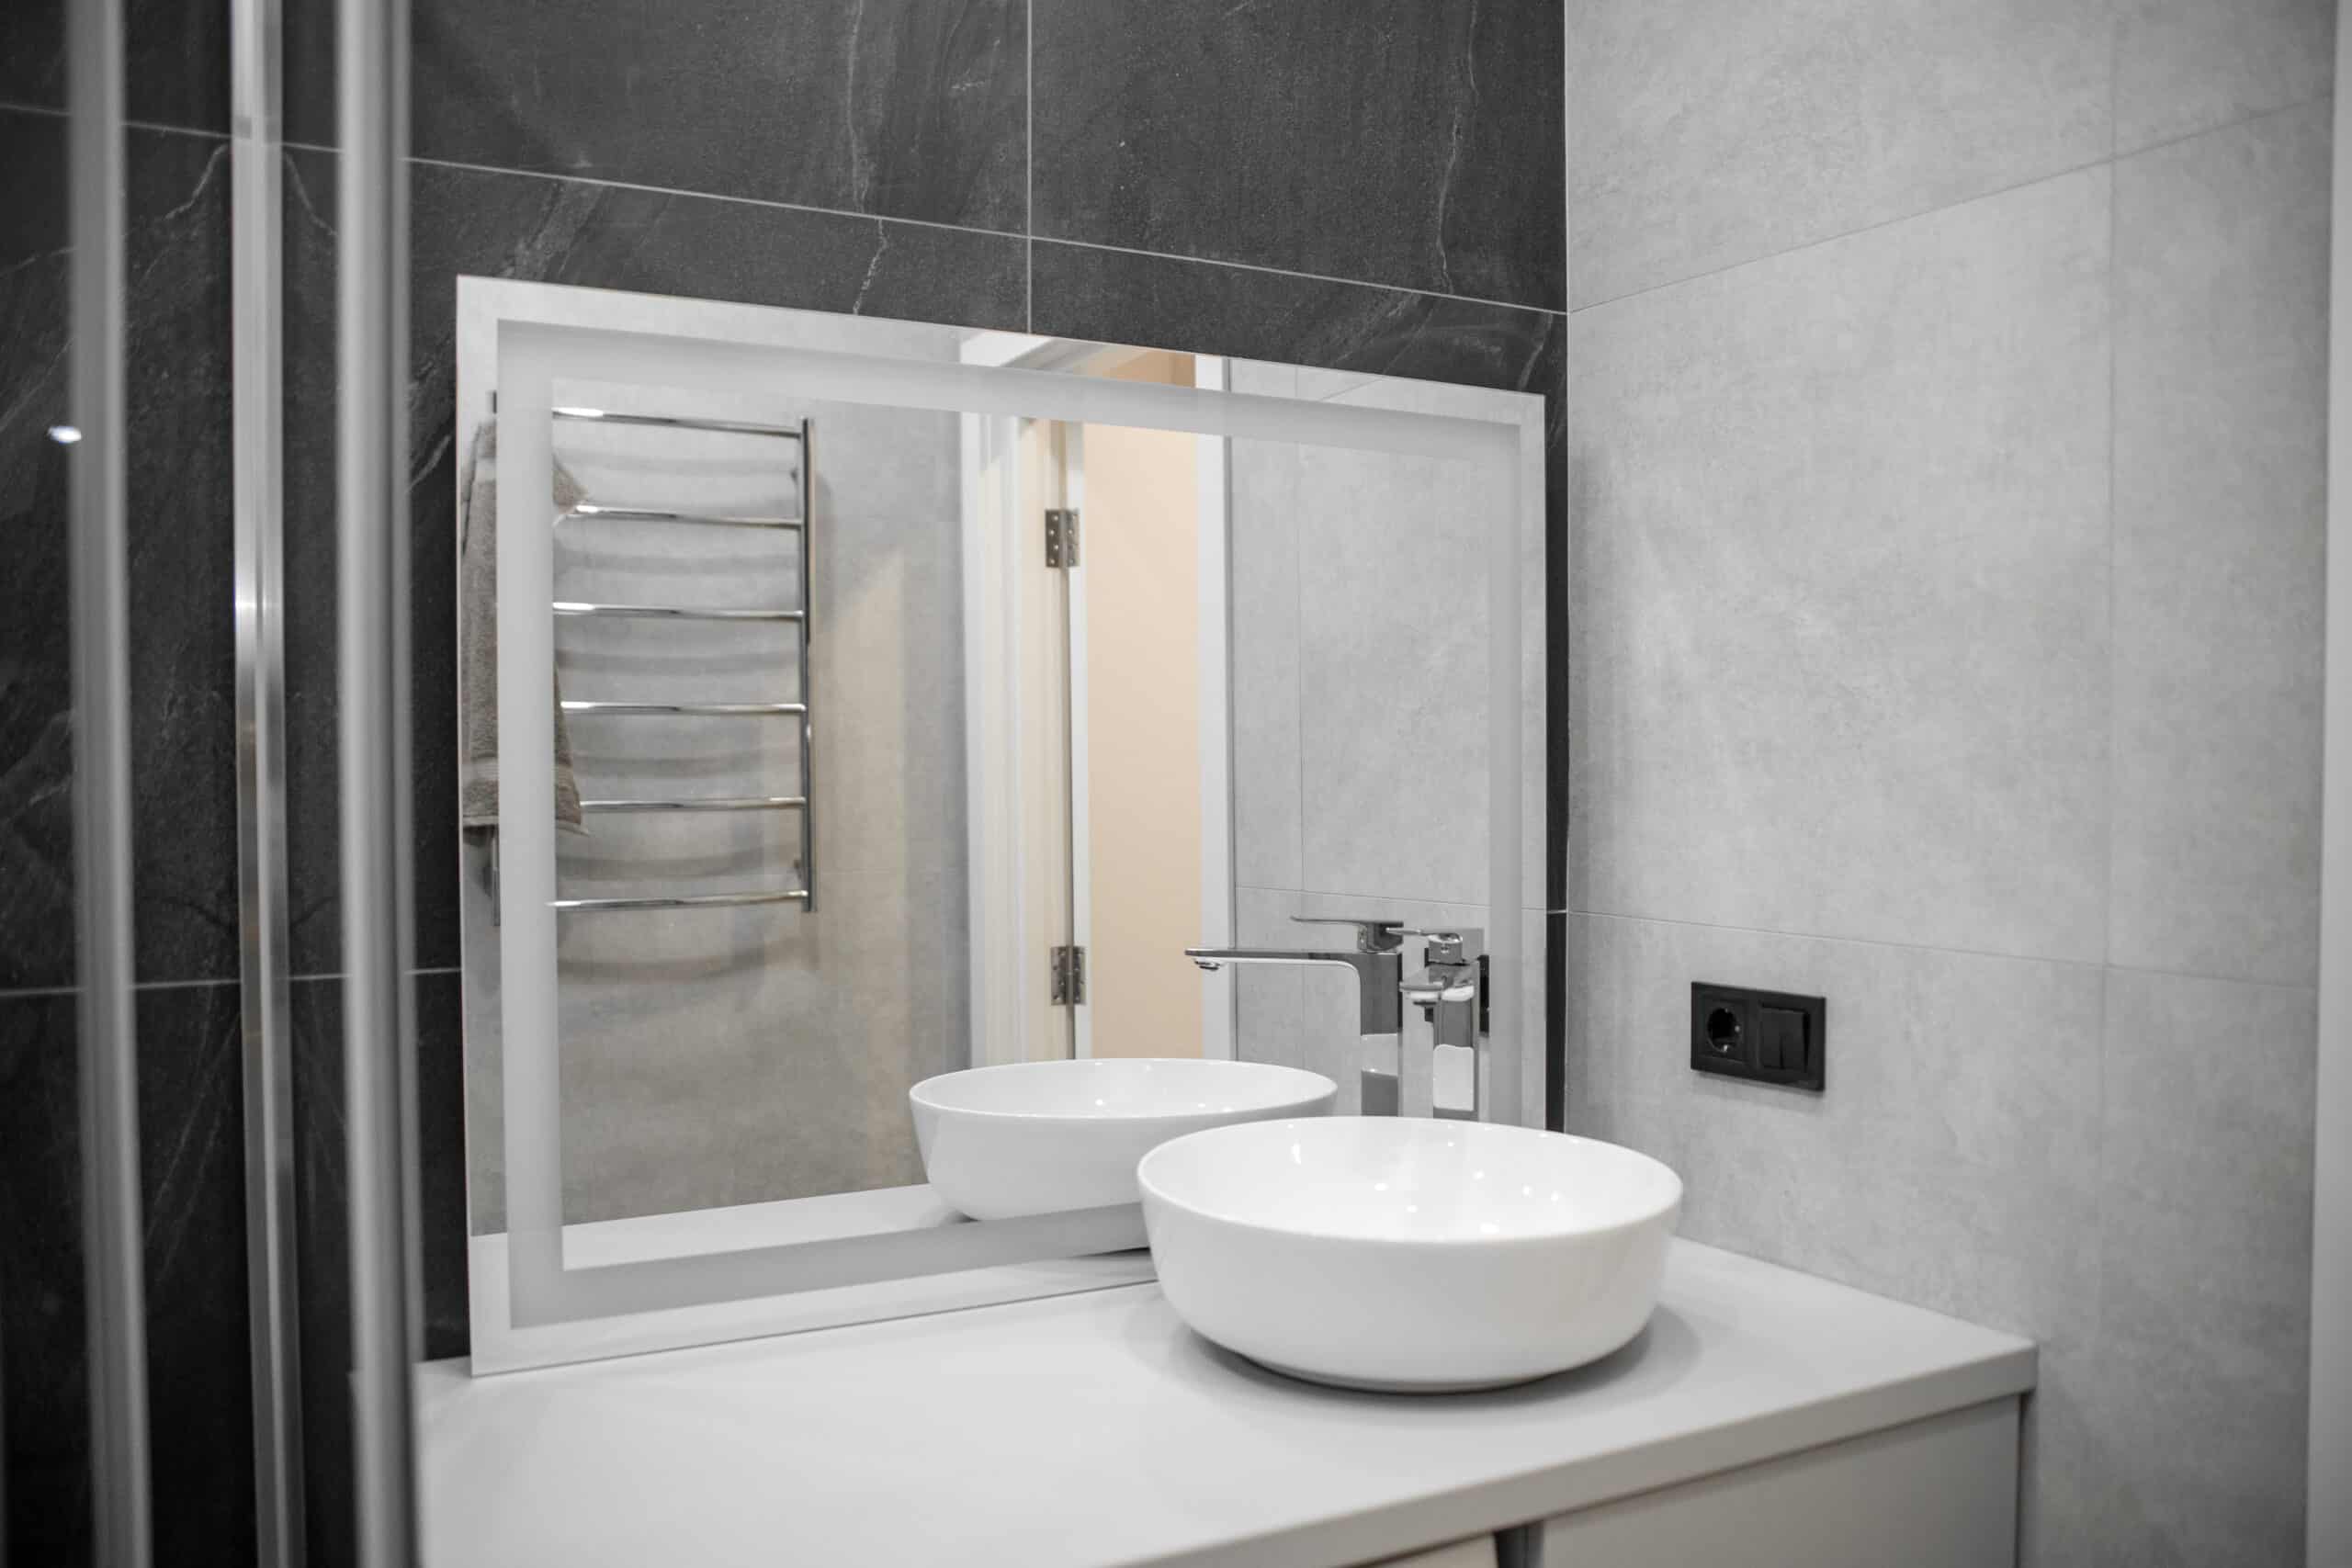 Bathroom interior with mirror and wash basin.